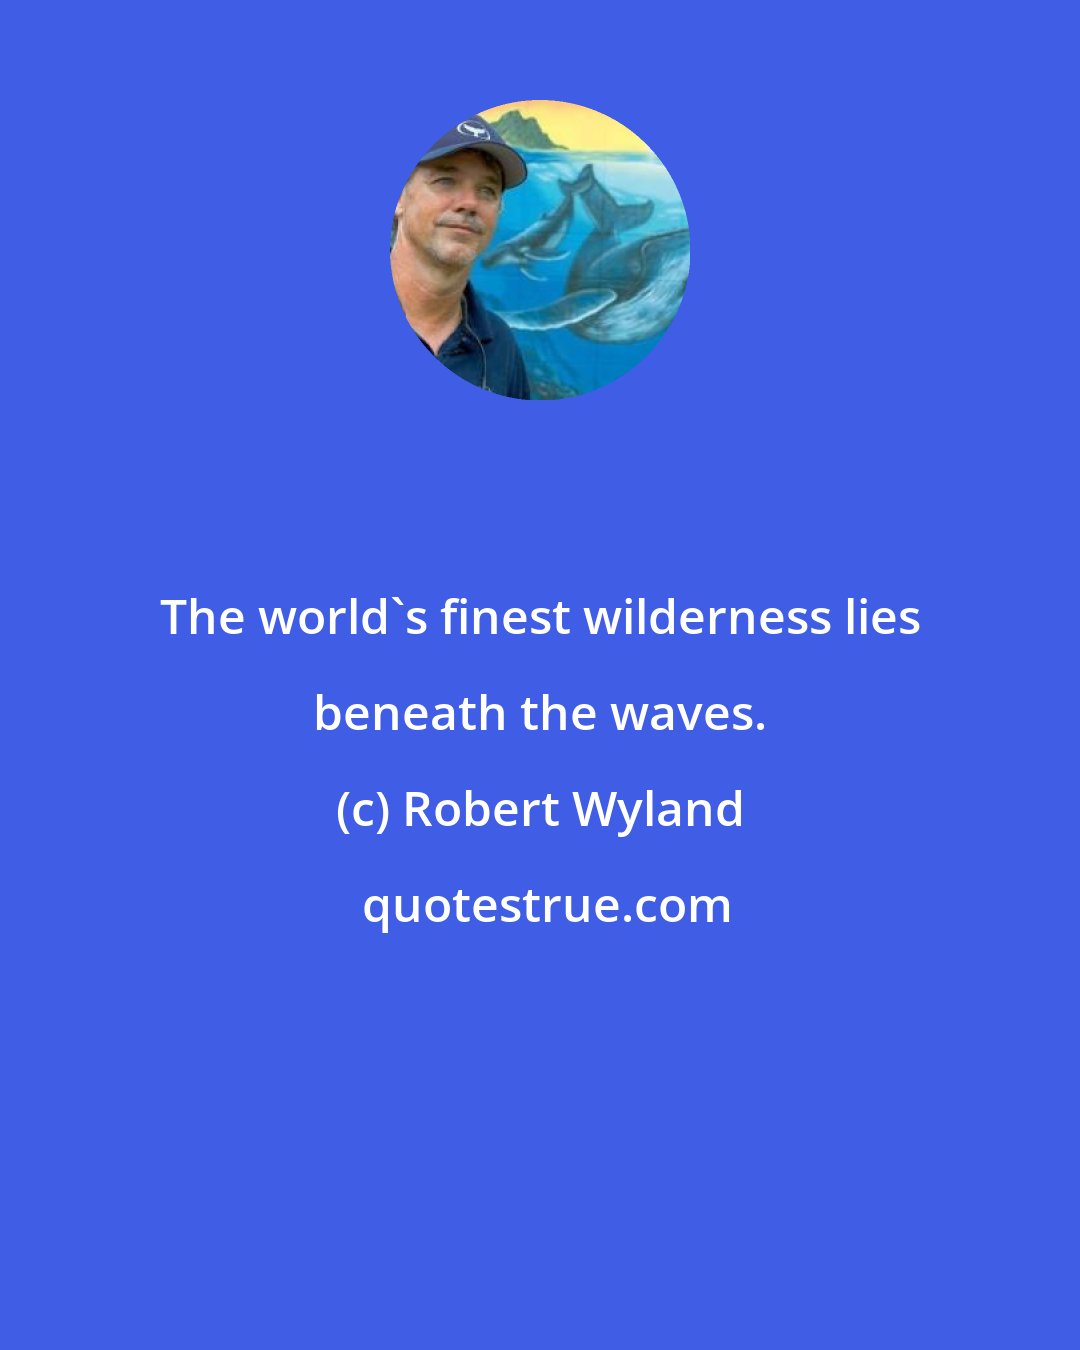 Robert Wyland: The world's finest wilderness lies beneath the waves.